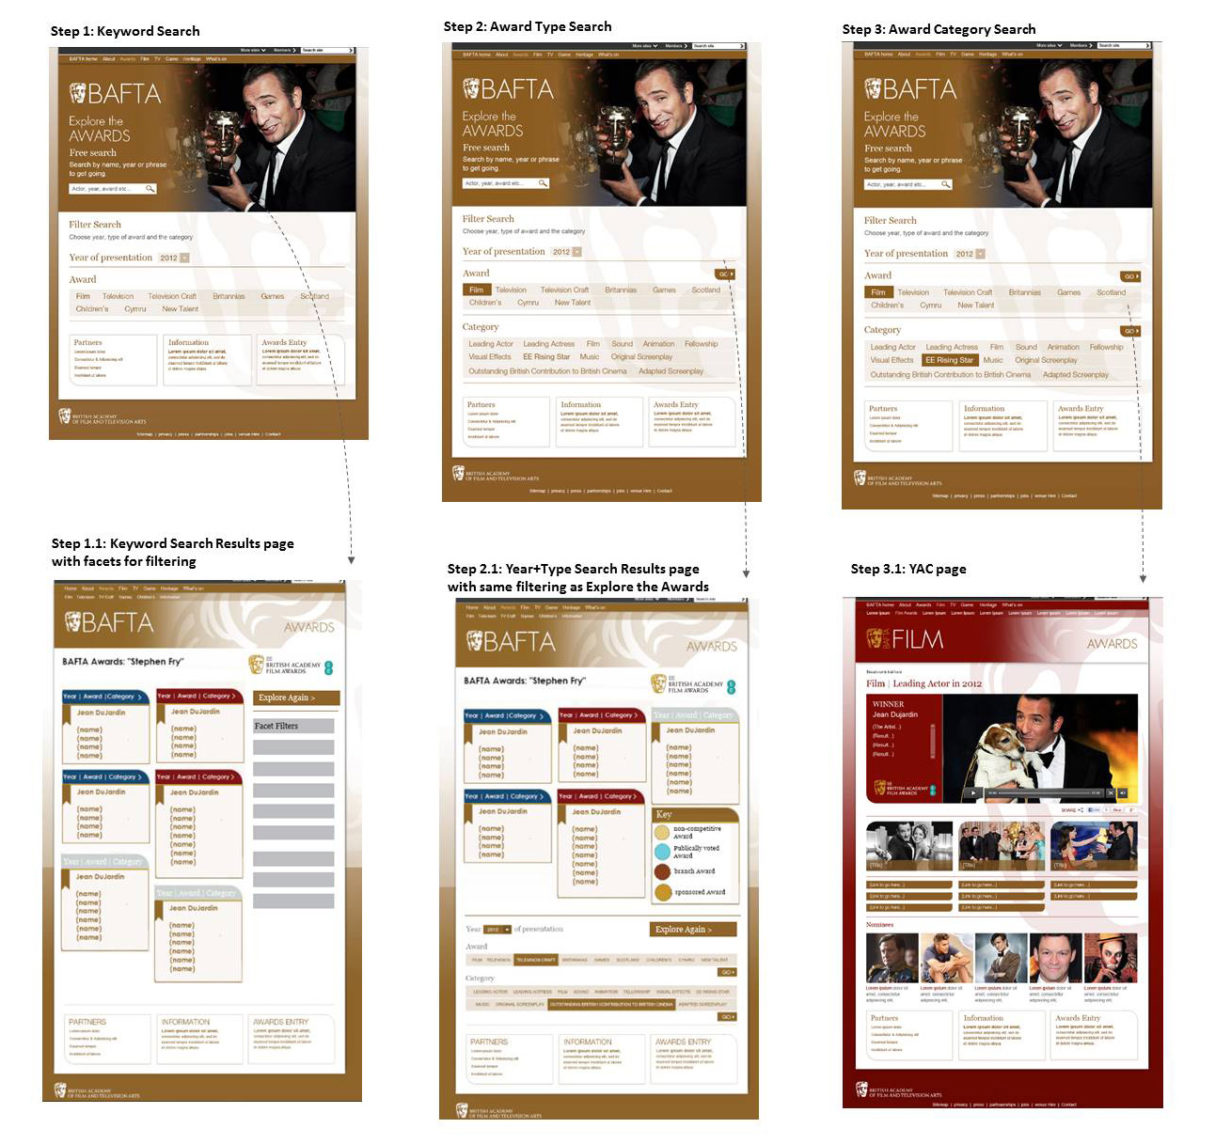 BAFTA Awards website search feature workflow